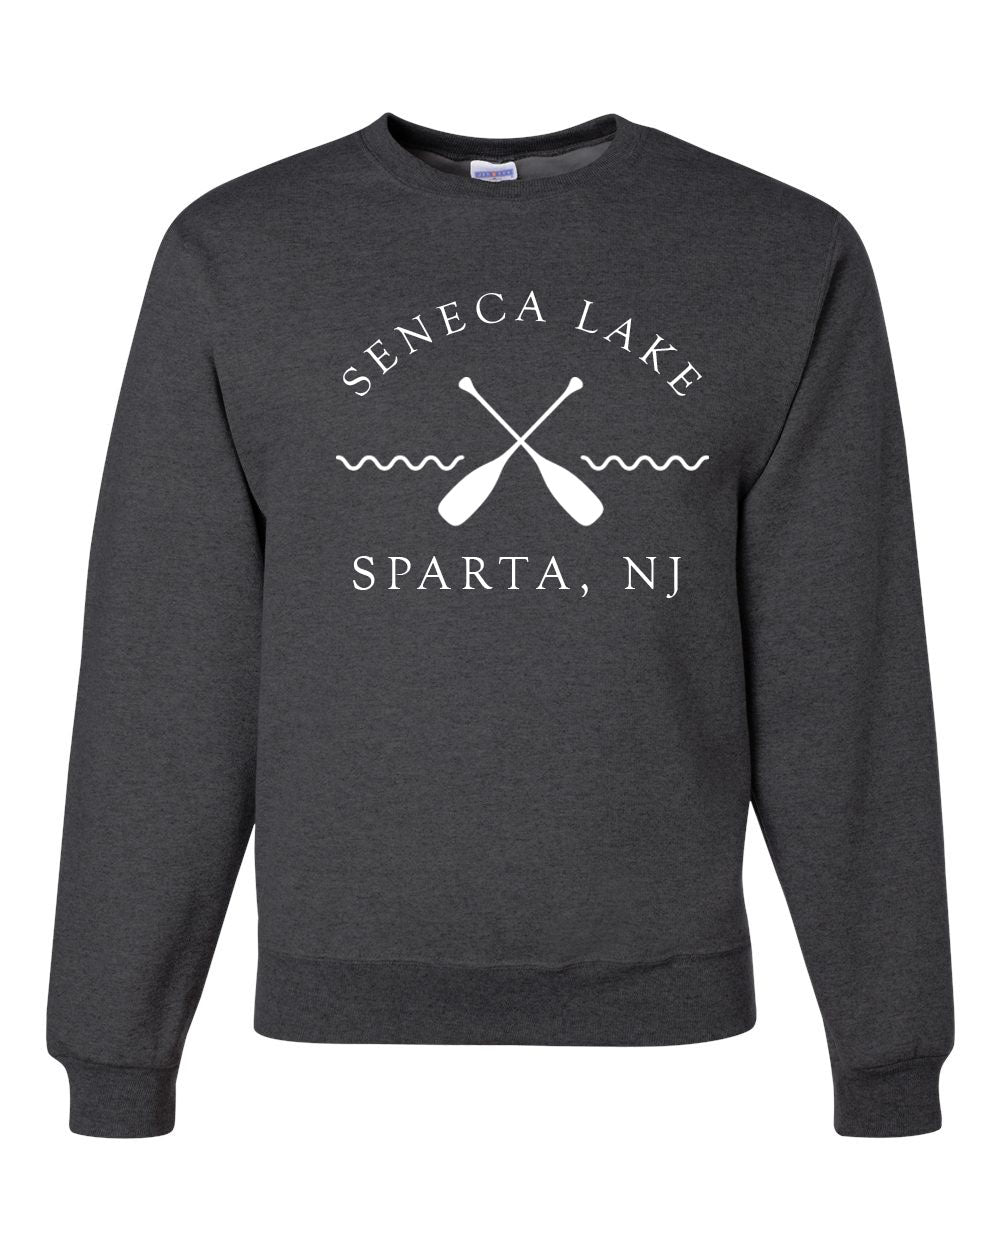 Seneca Lake Design 5 non hooded sweatshirt